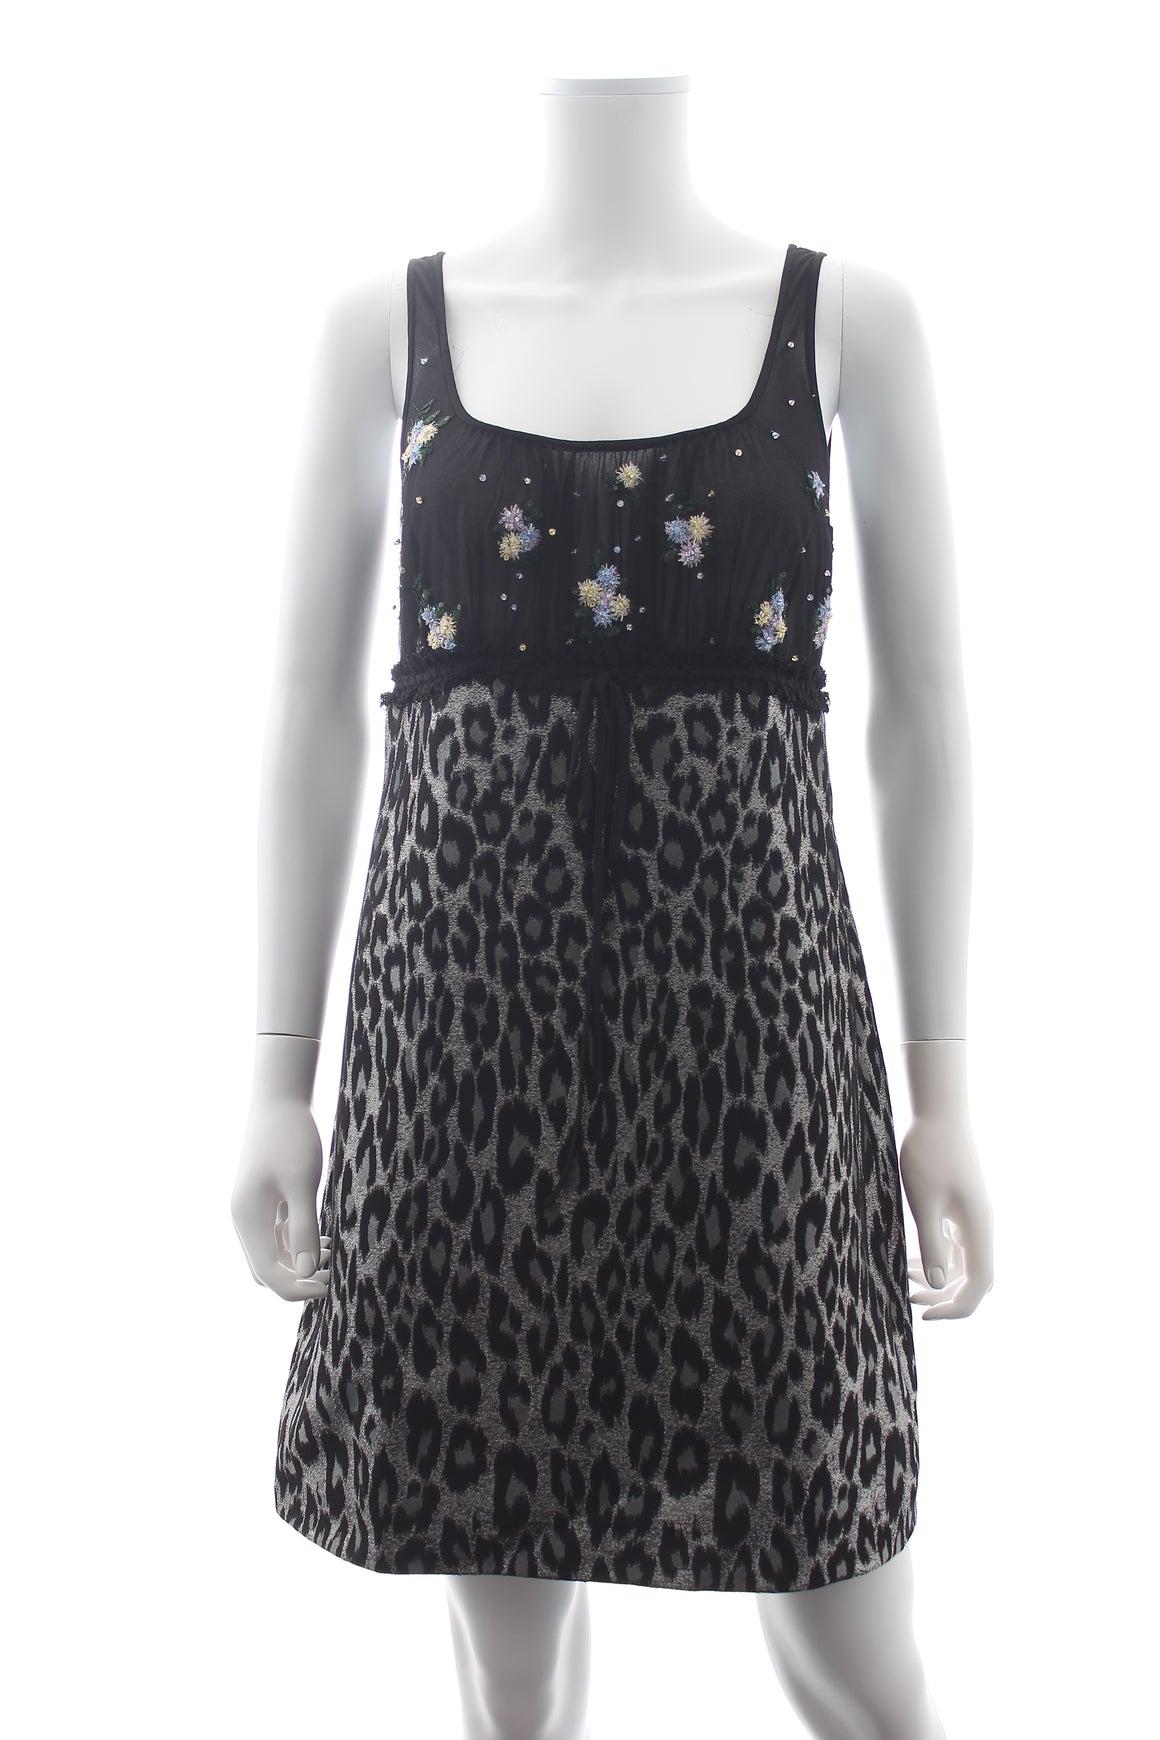 Miu Miu Embroidered Tulle and Leopard Print Jacquard Mini Dress